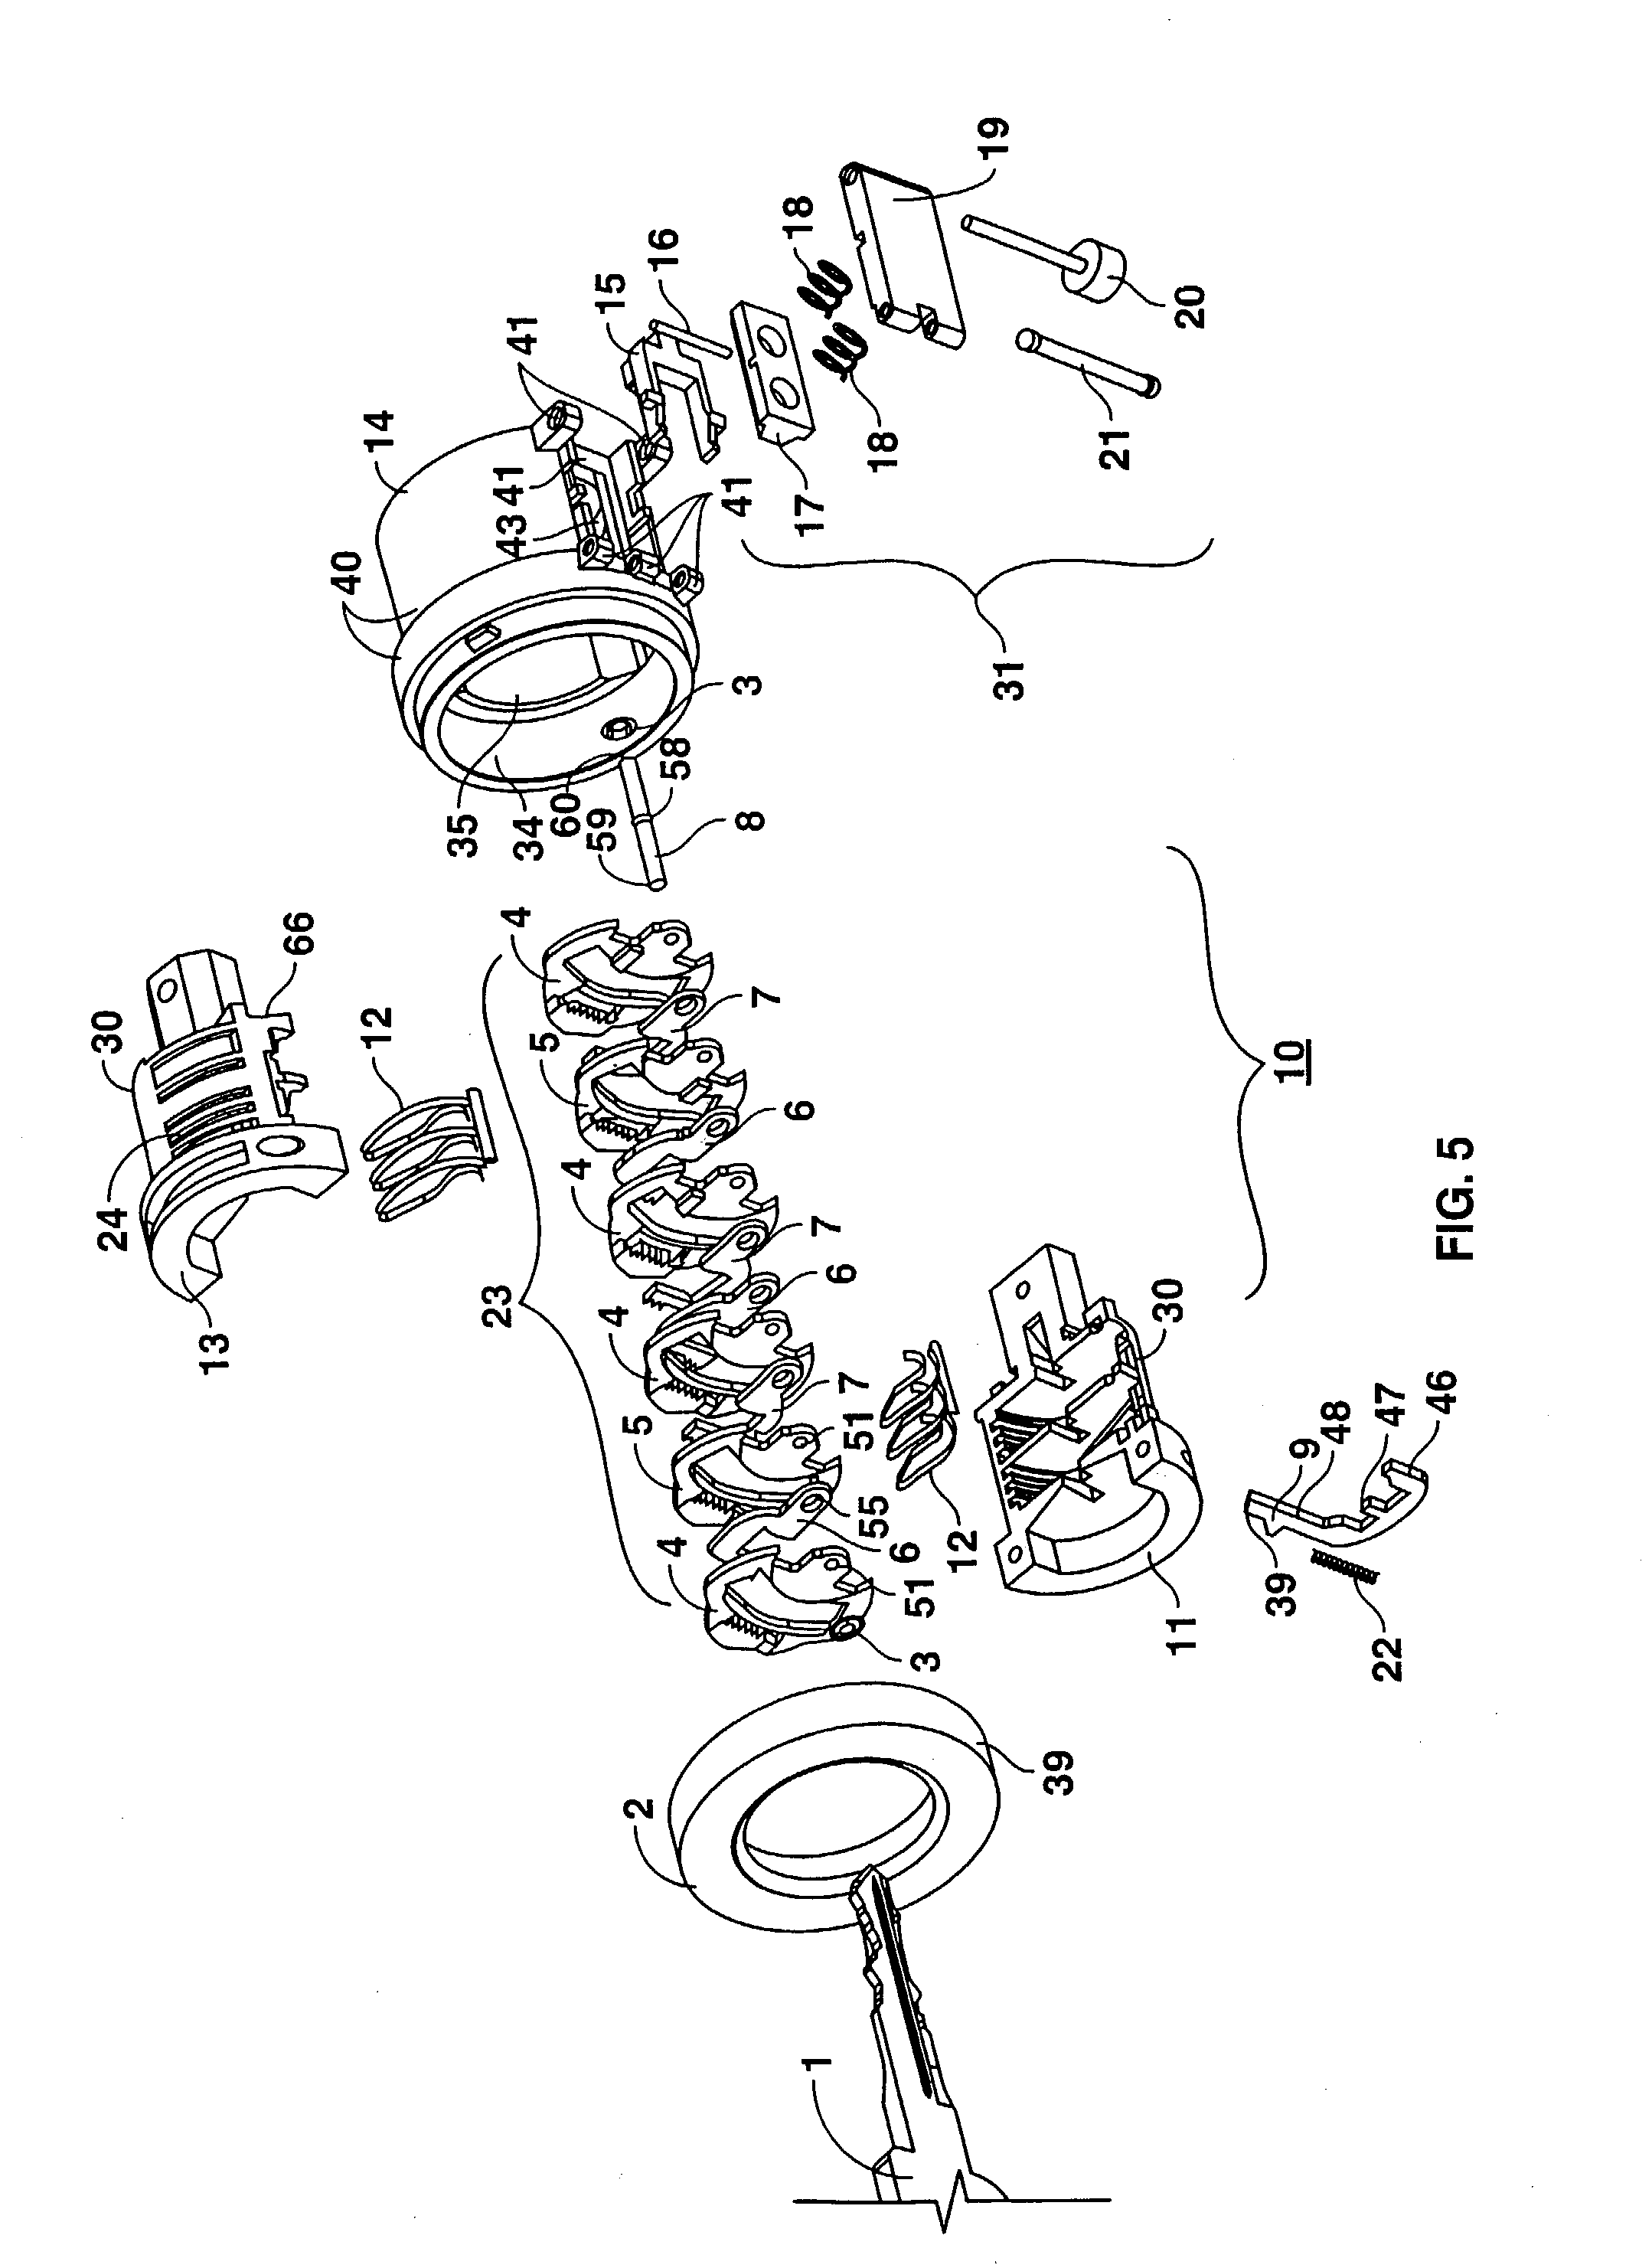 Vehicular lock apparatus and method